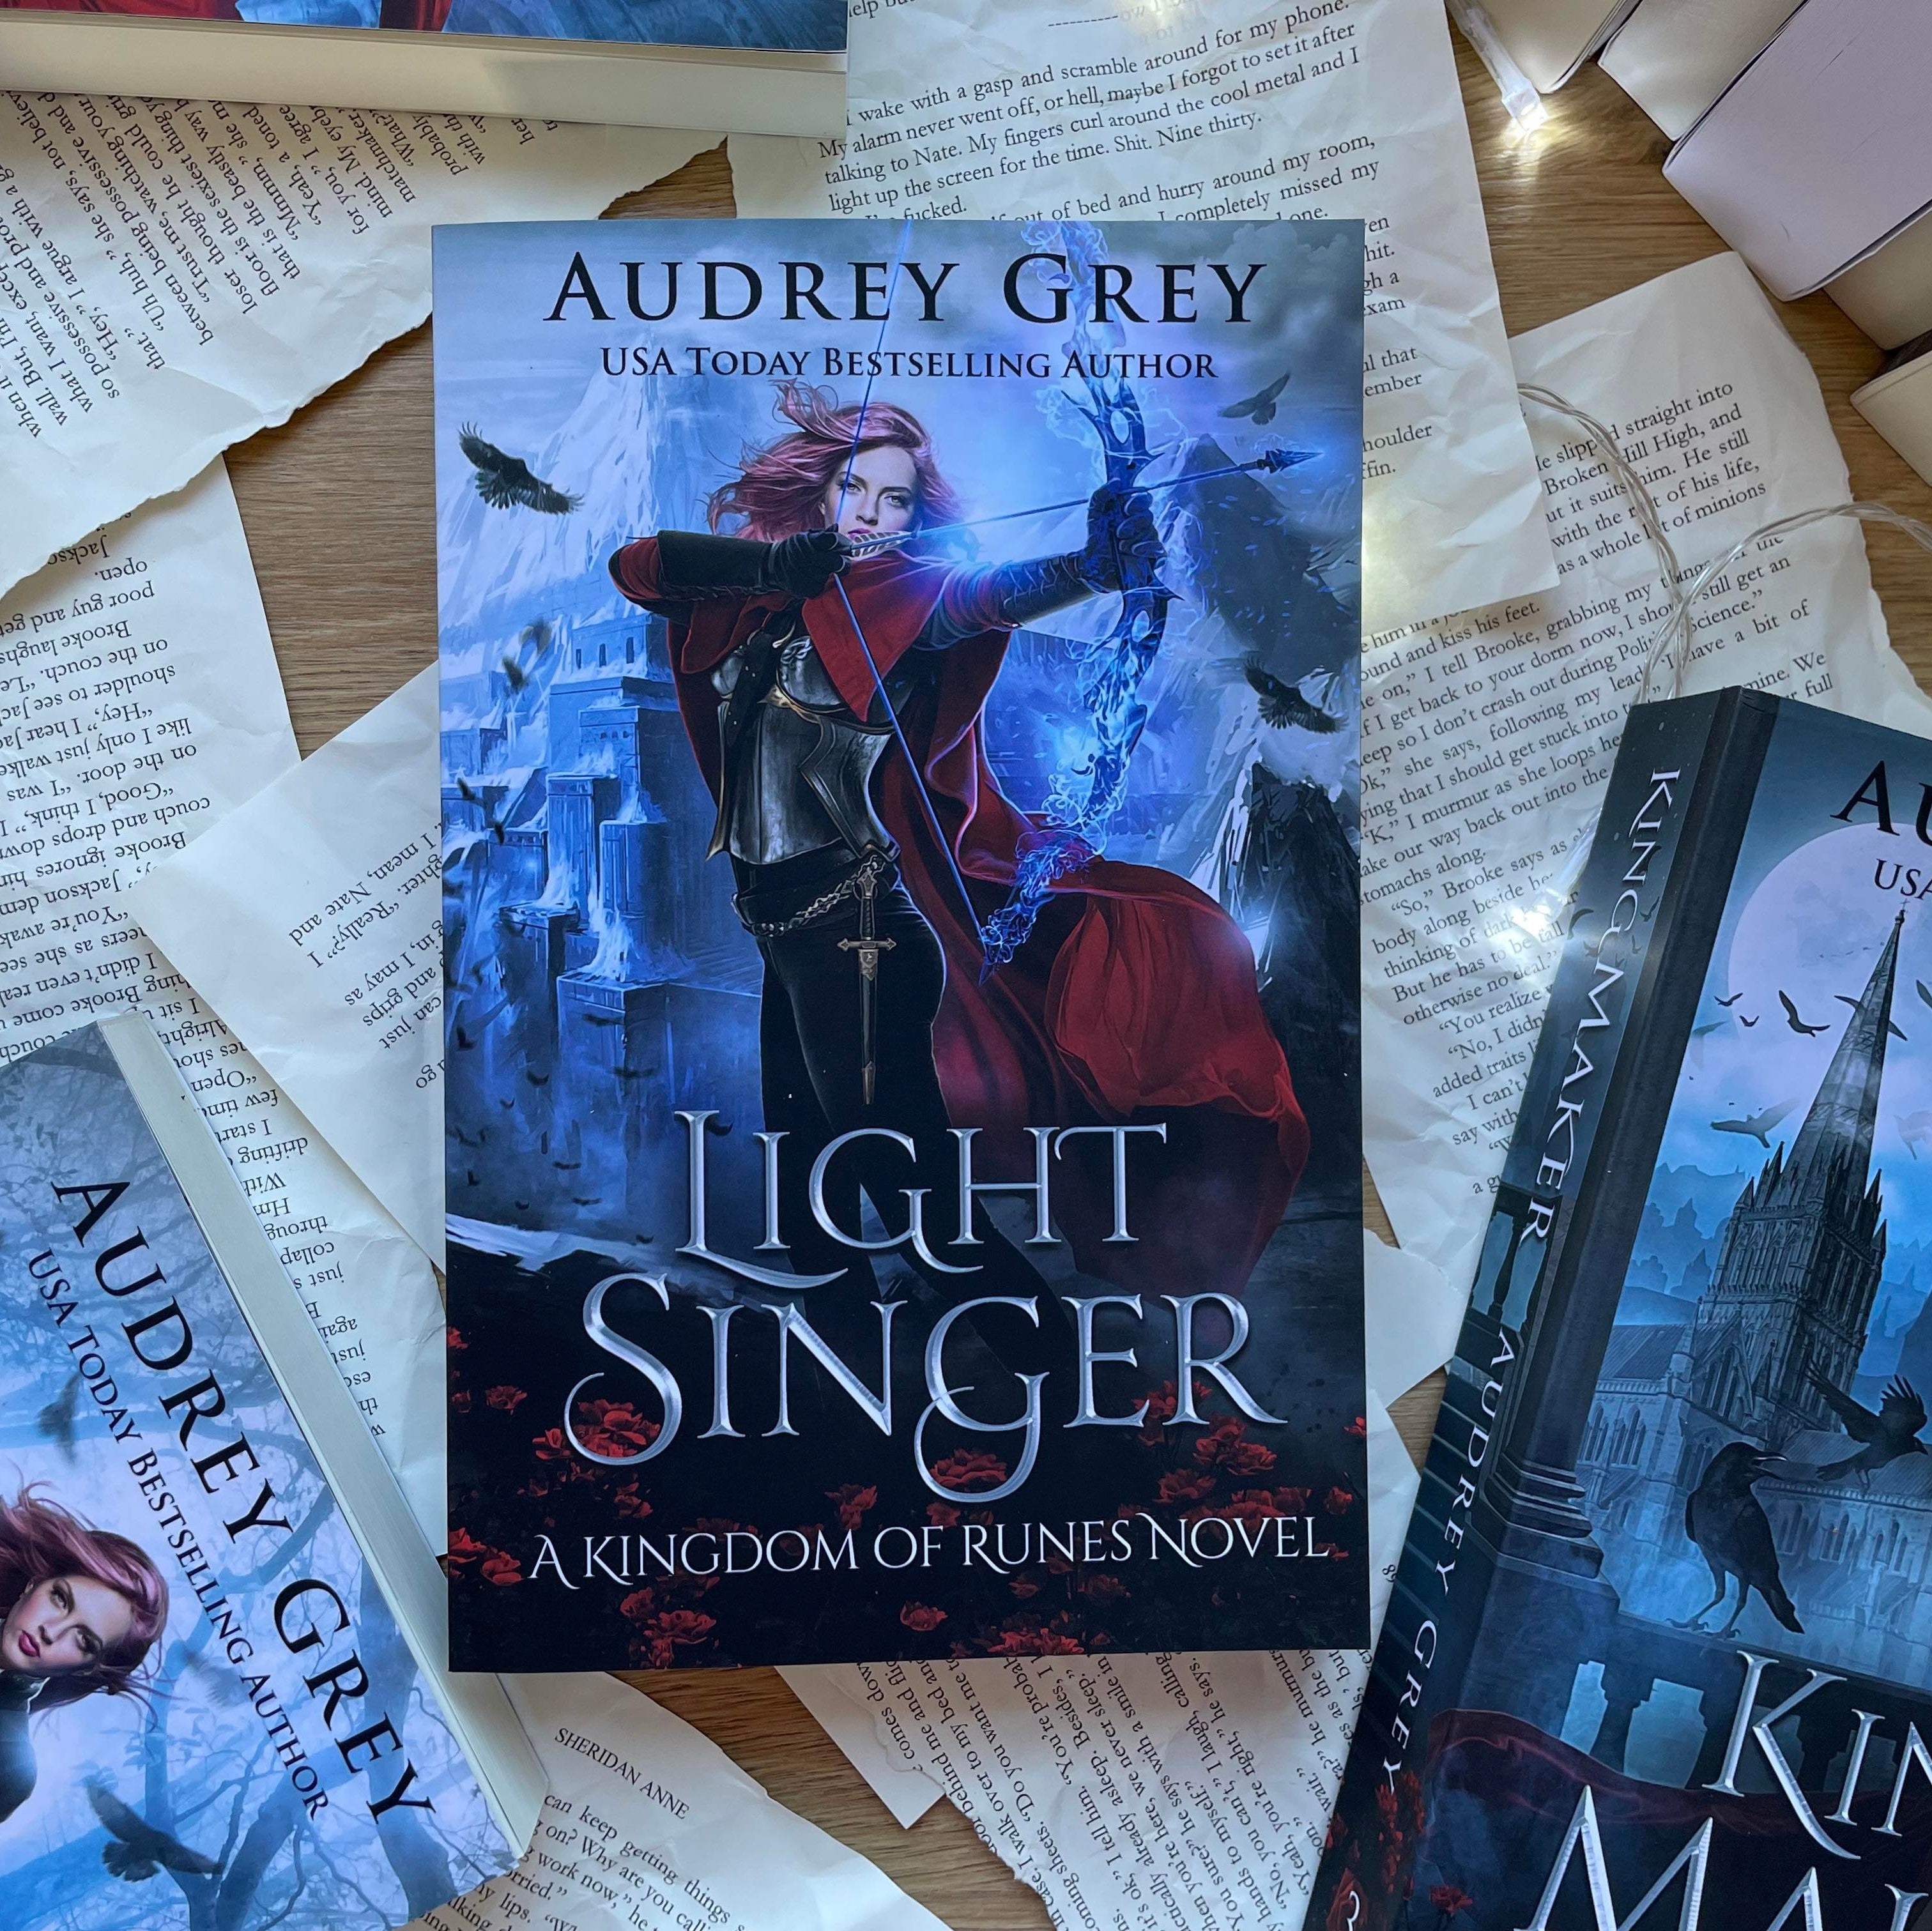 Kingdom of Runes series by Audrey Grey